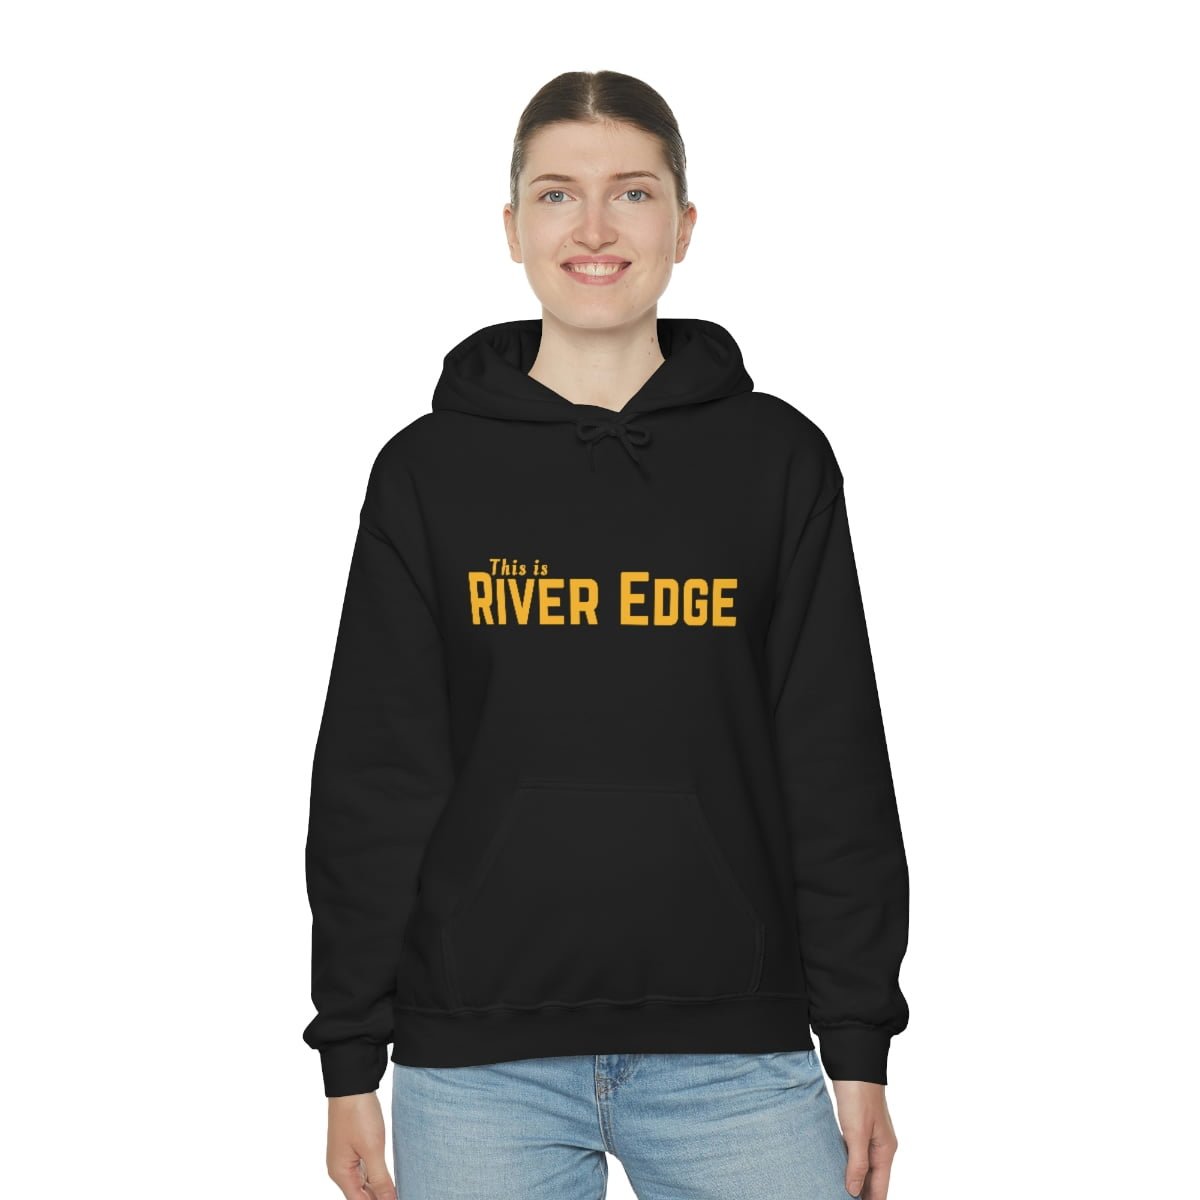 This is River Edge Sweatshirt